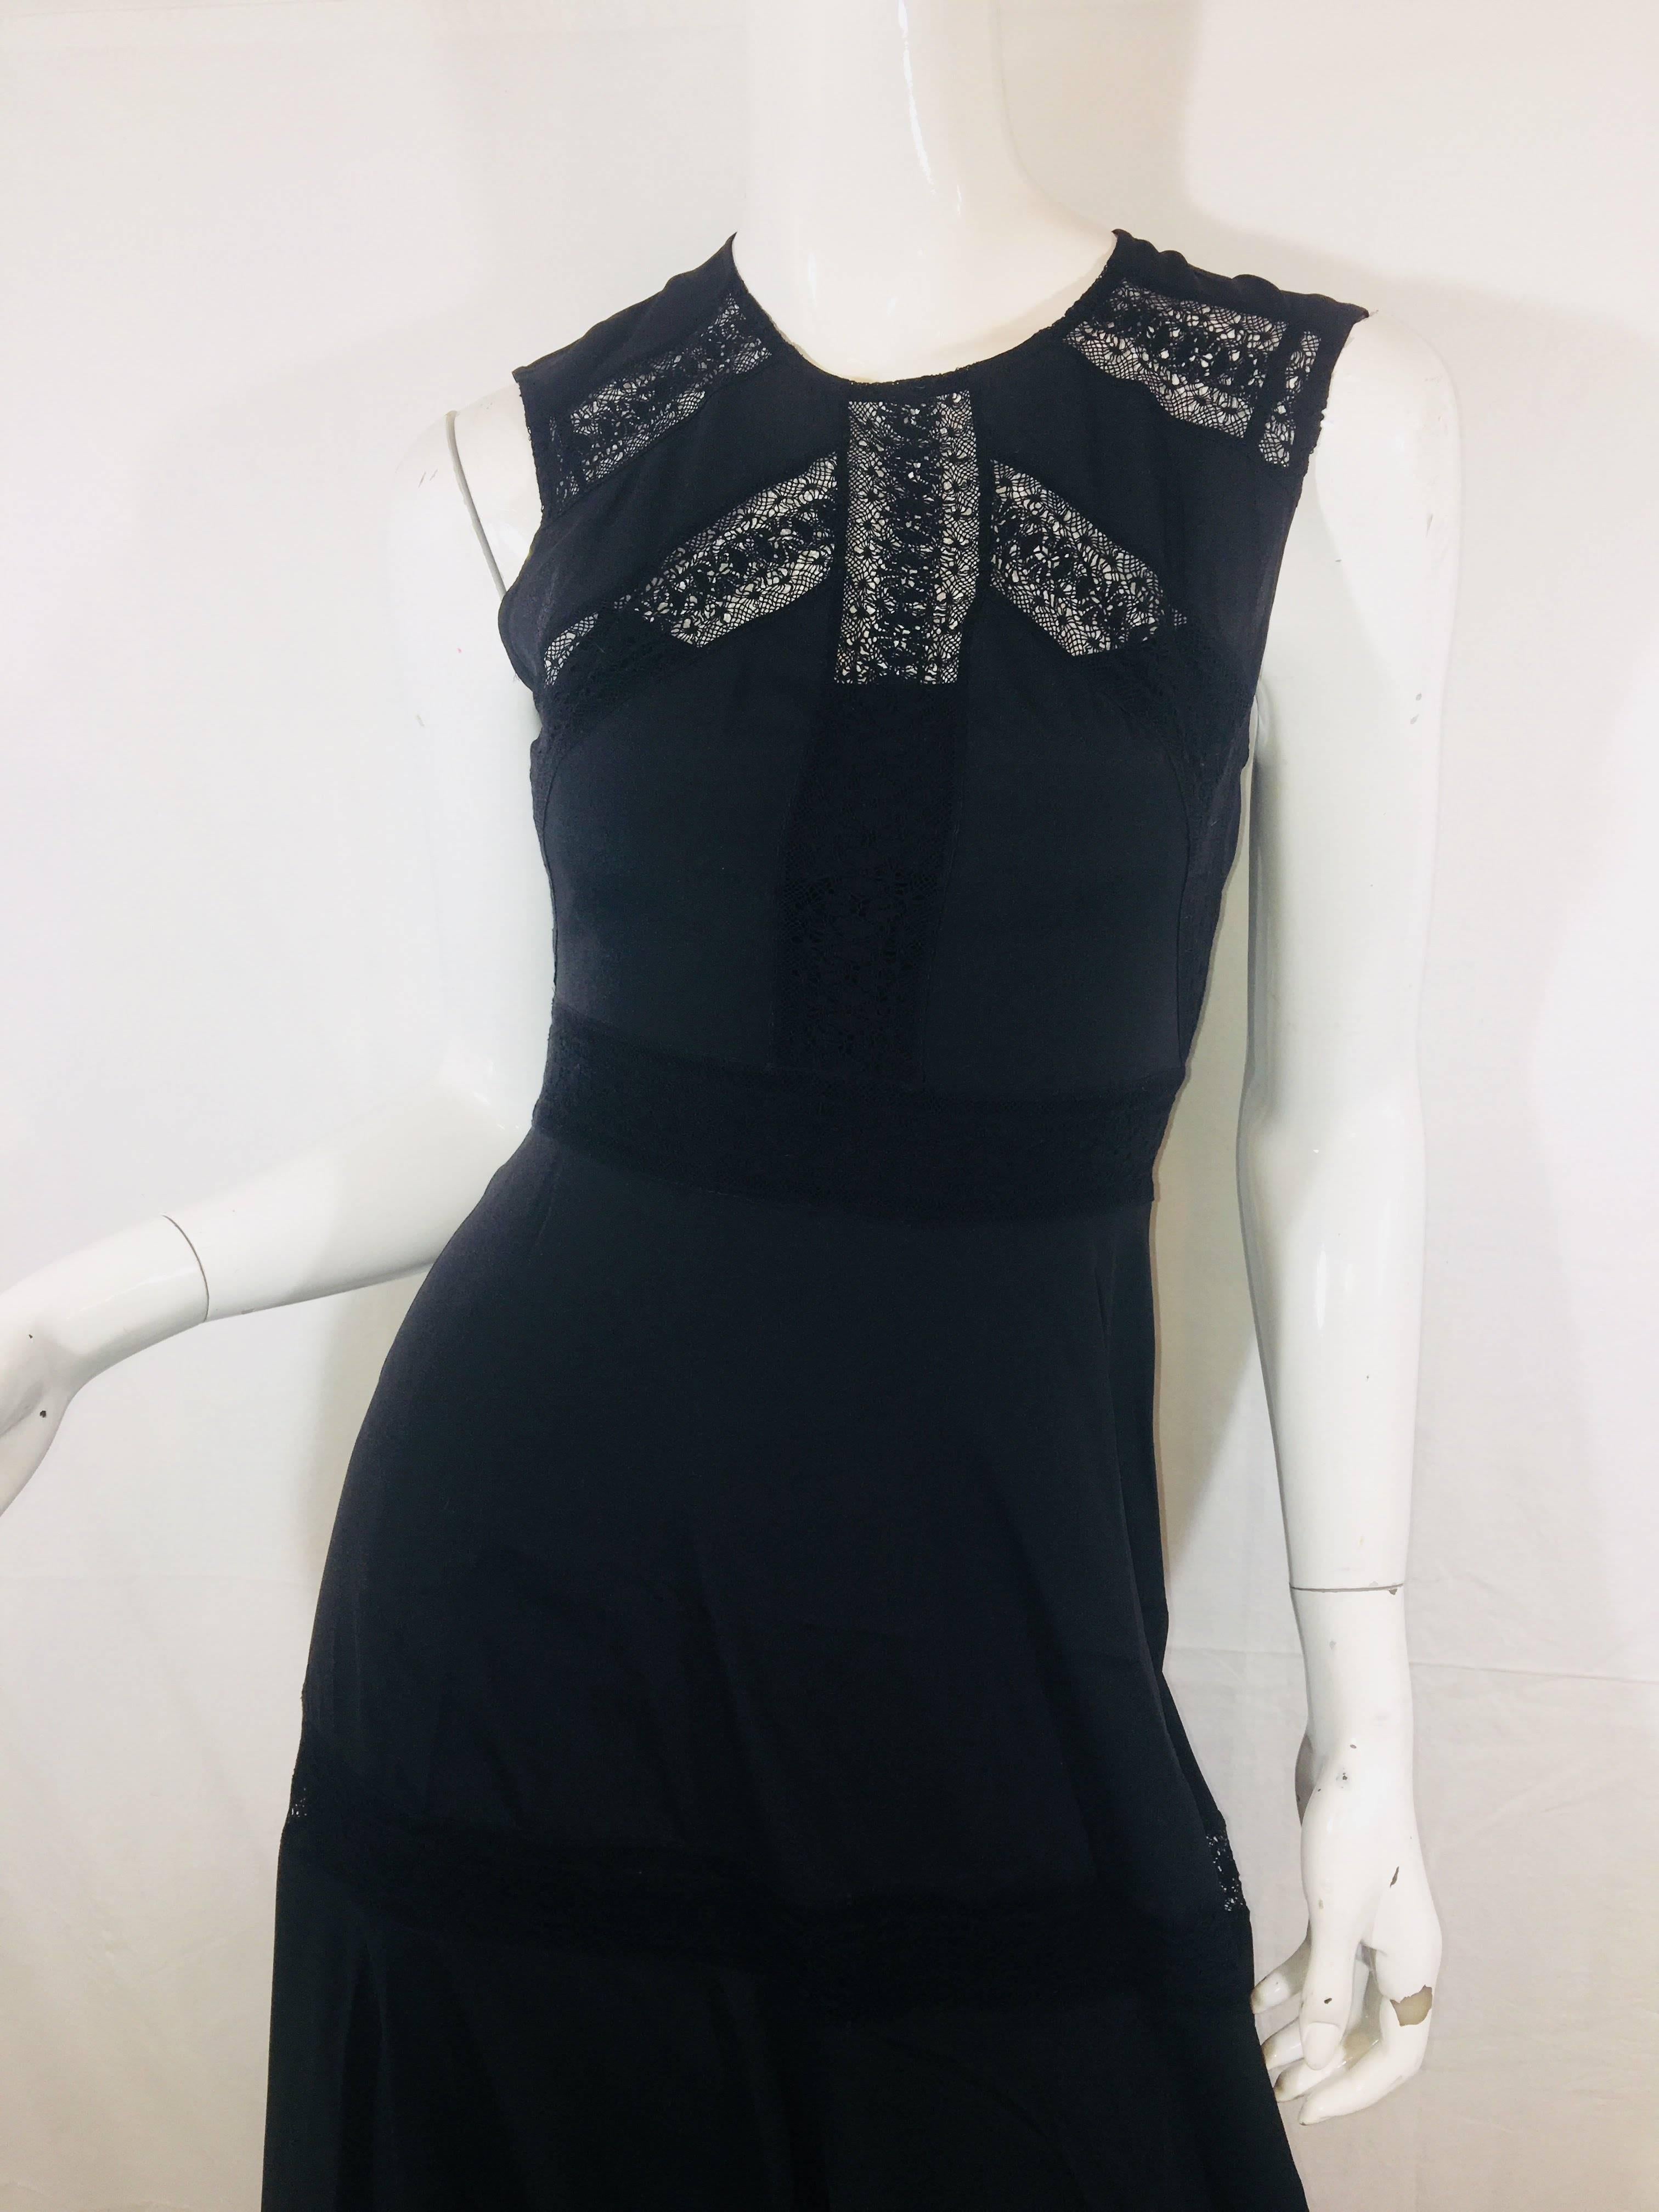 Needle & Thread Maxi Dress- New with Tags! 
Sleeveless 